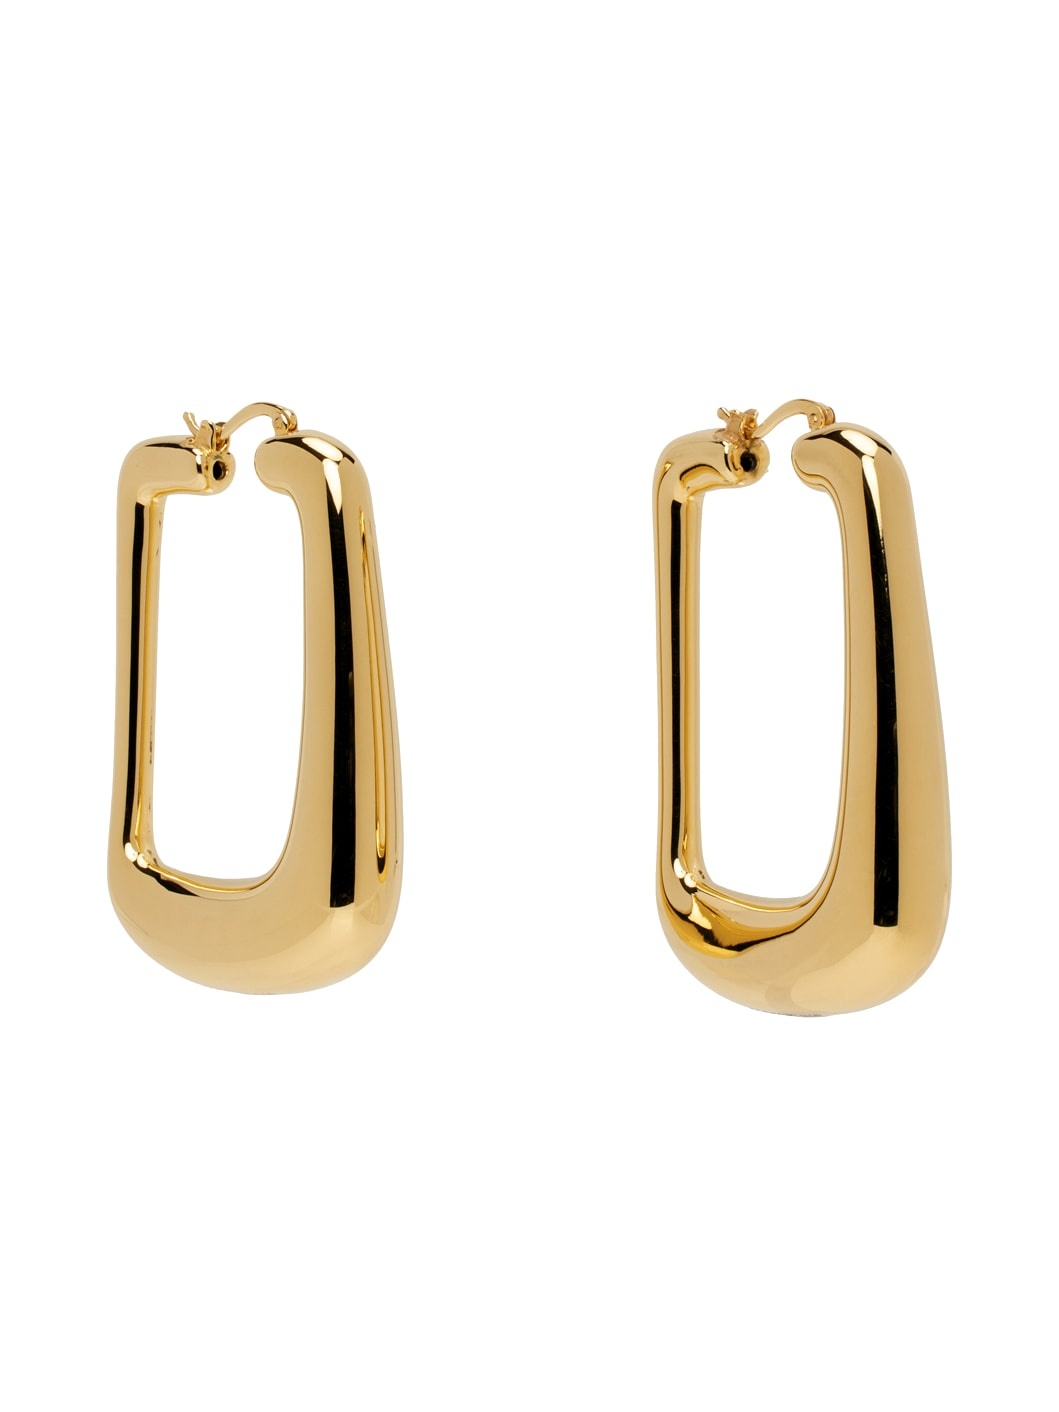 Gold Les Sculptures 'Les boucles Ovalo' Earrings - 2